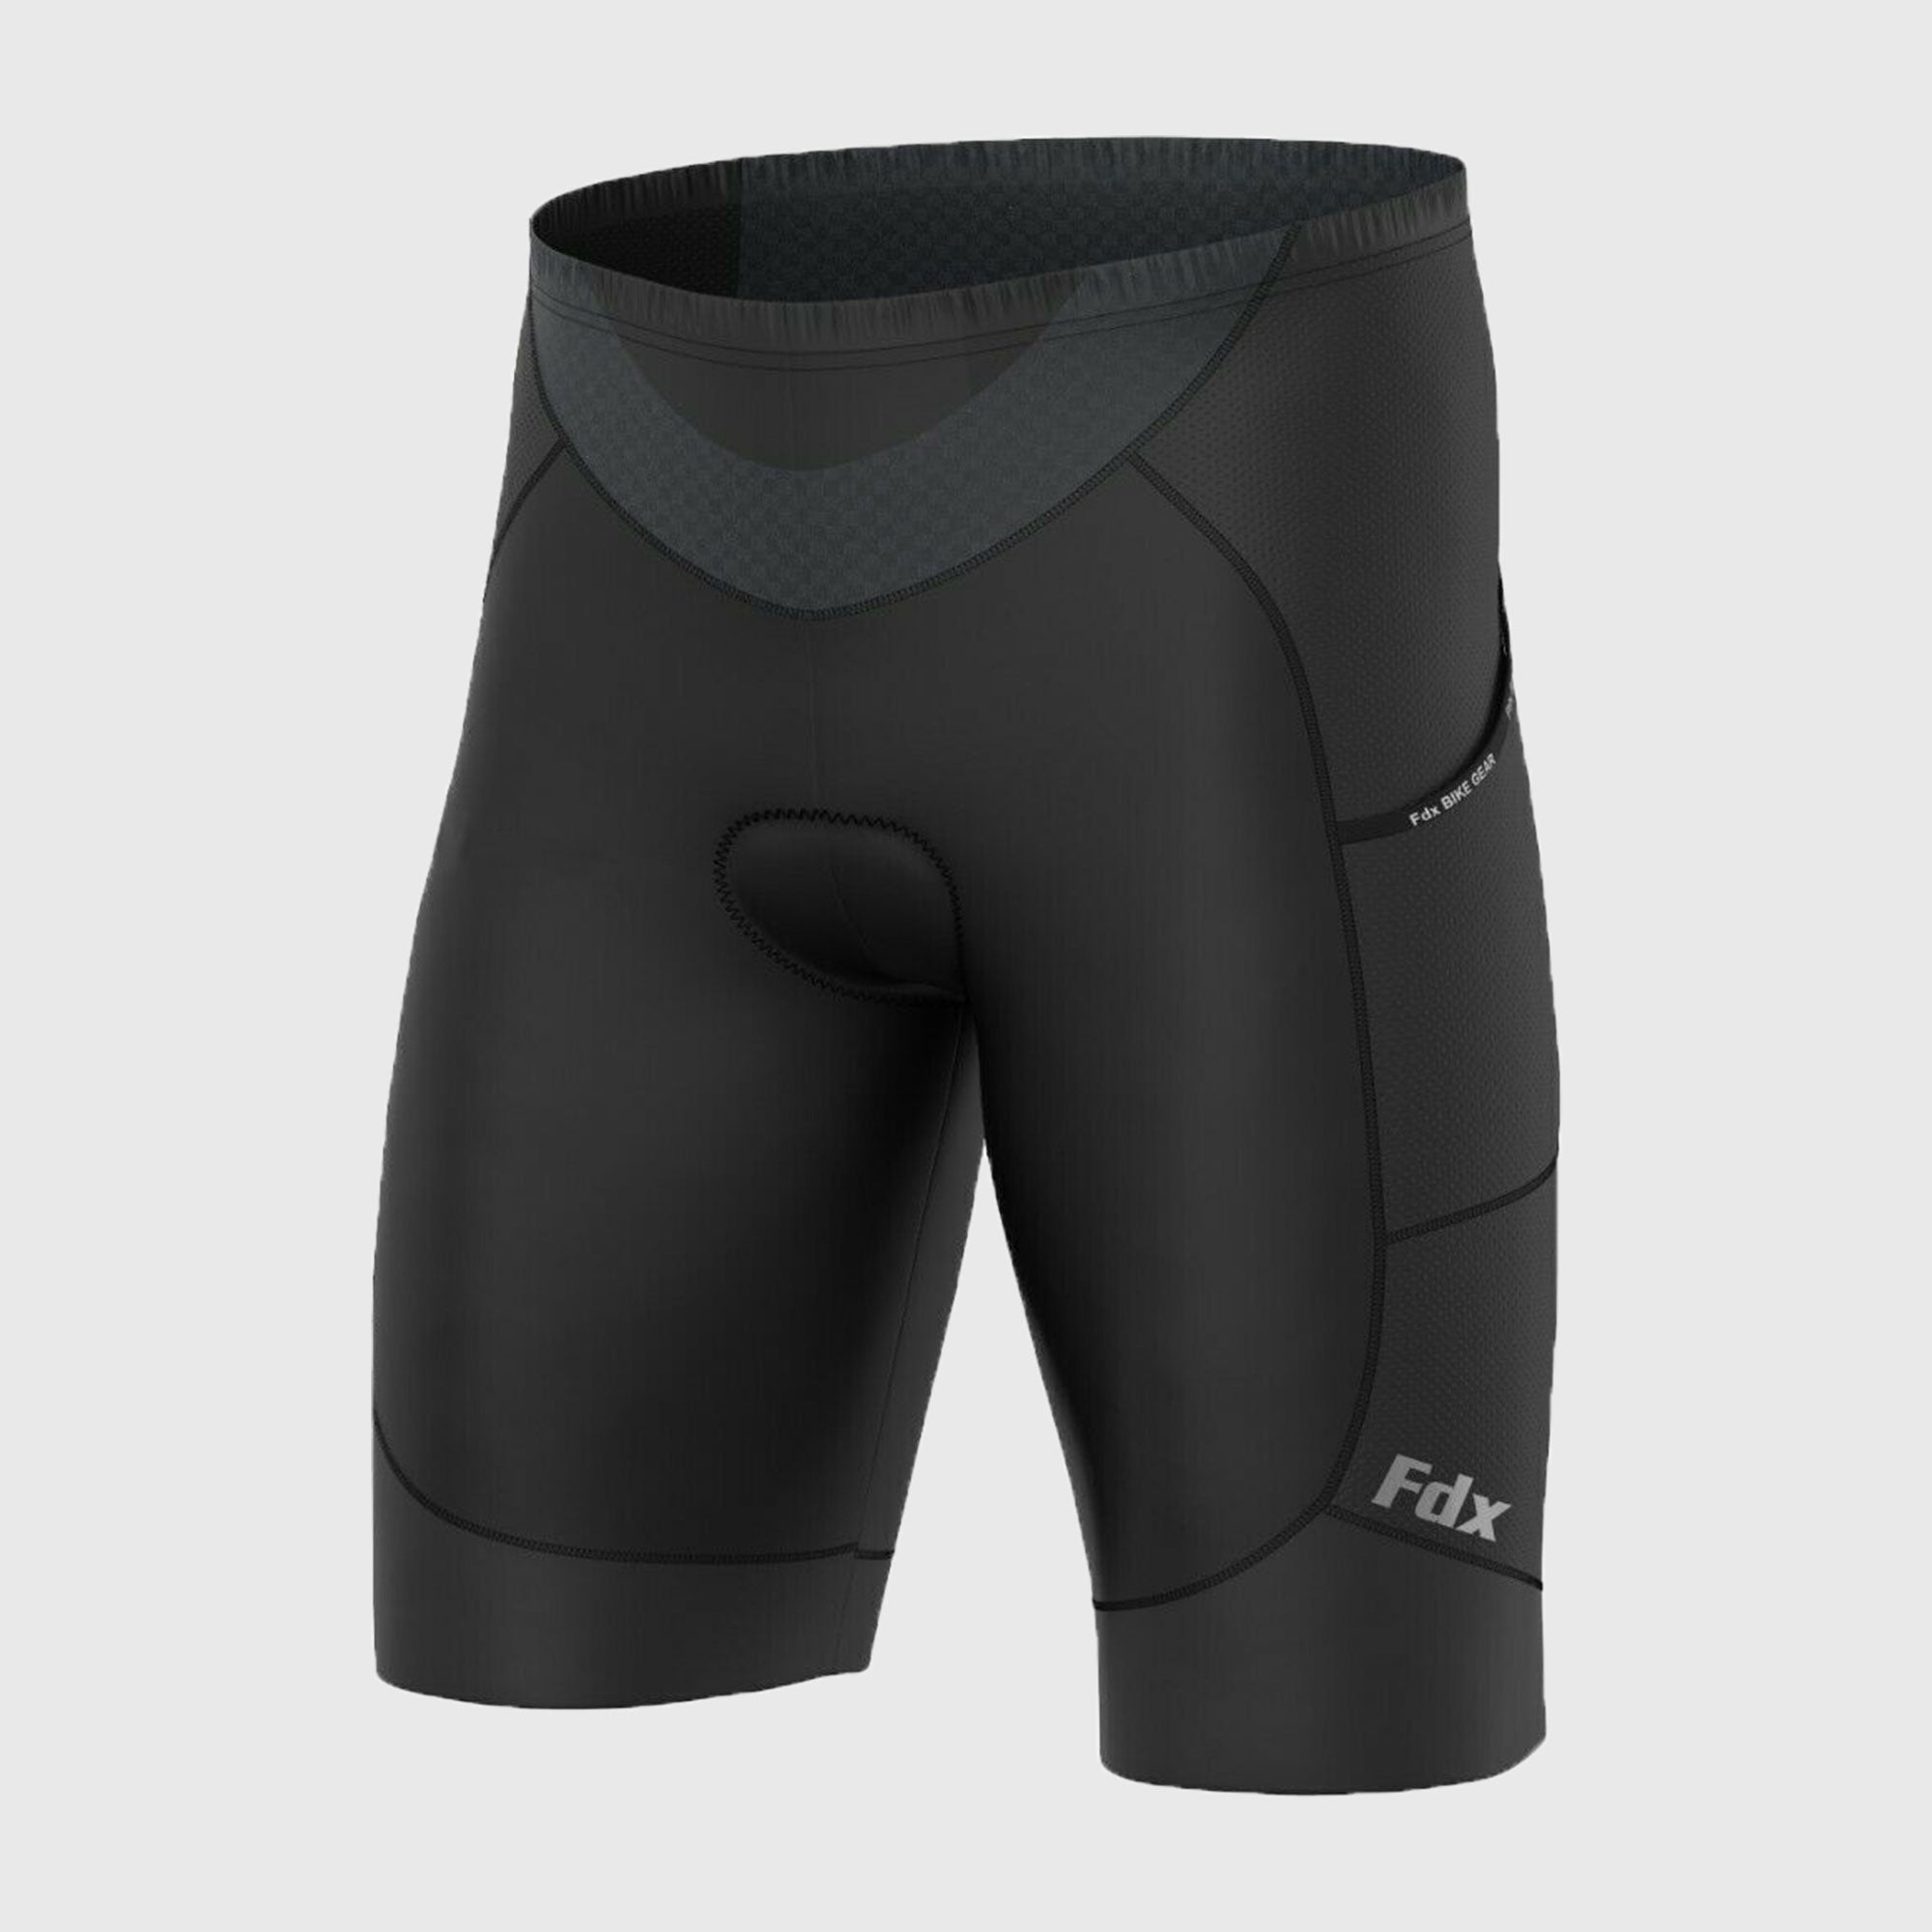 butik Det Lånte Fdx Essential Men's Padded Summer Cycling Shorts with Pockets Black | FDX  Sports® - FDX Sports US